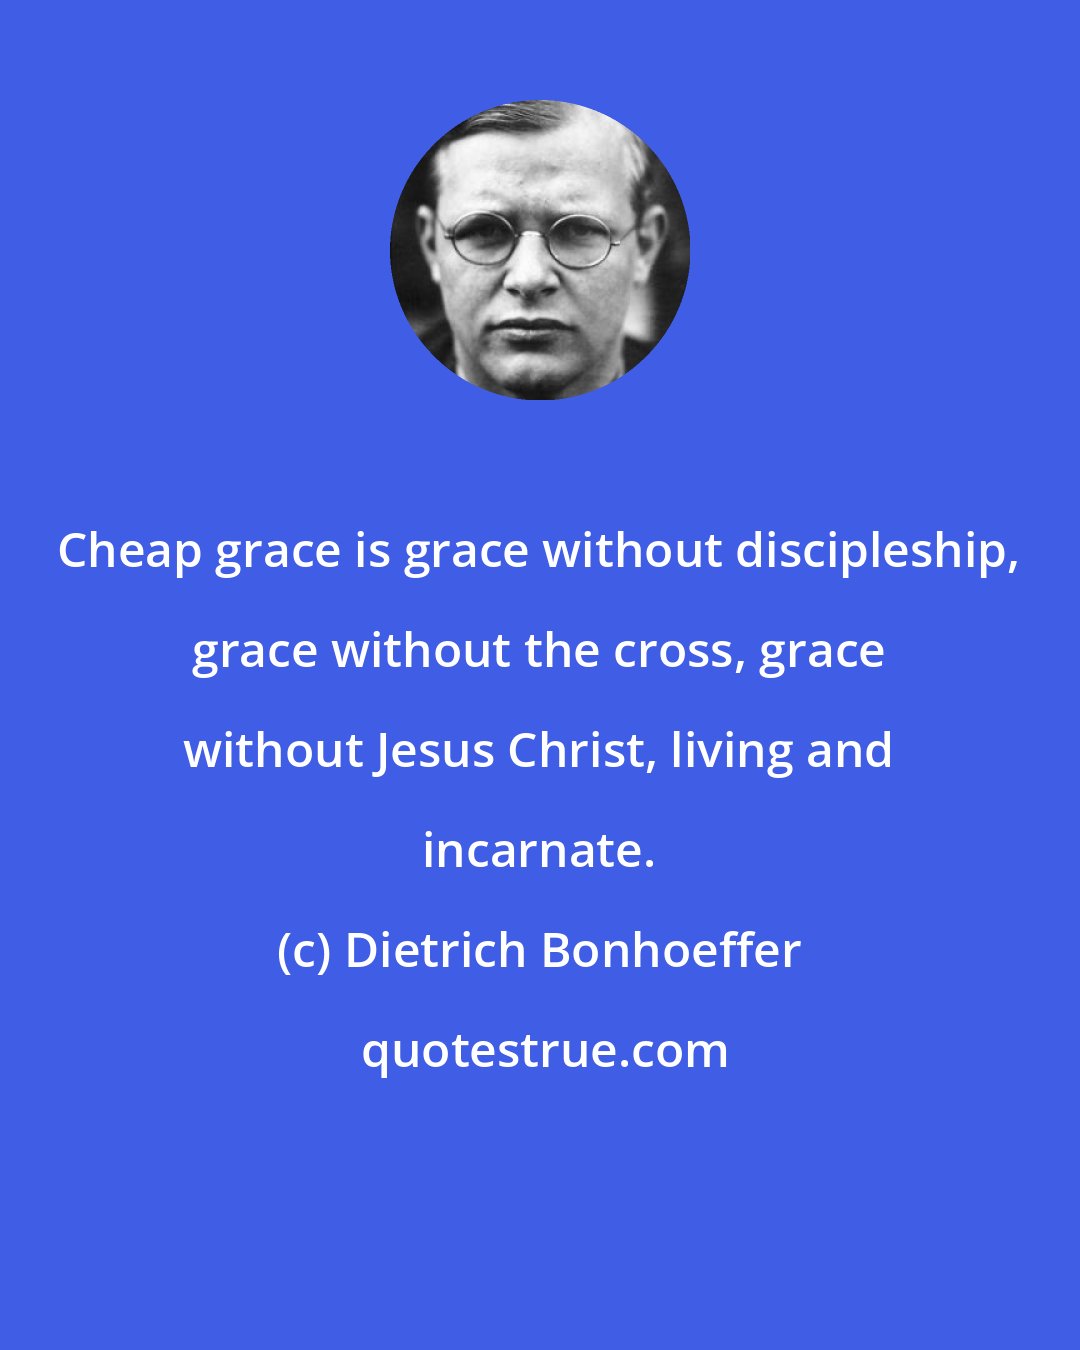 Dietrich Bonhoeffer: Cheap grace is grace without discipleship, grace without the cross, grace without Jesus Christ, living and incarnate.